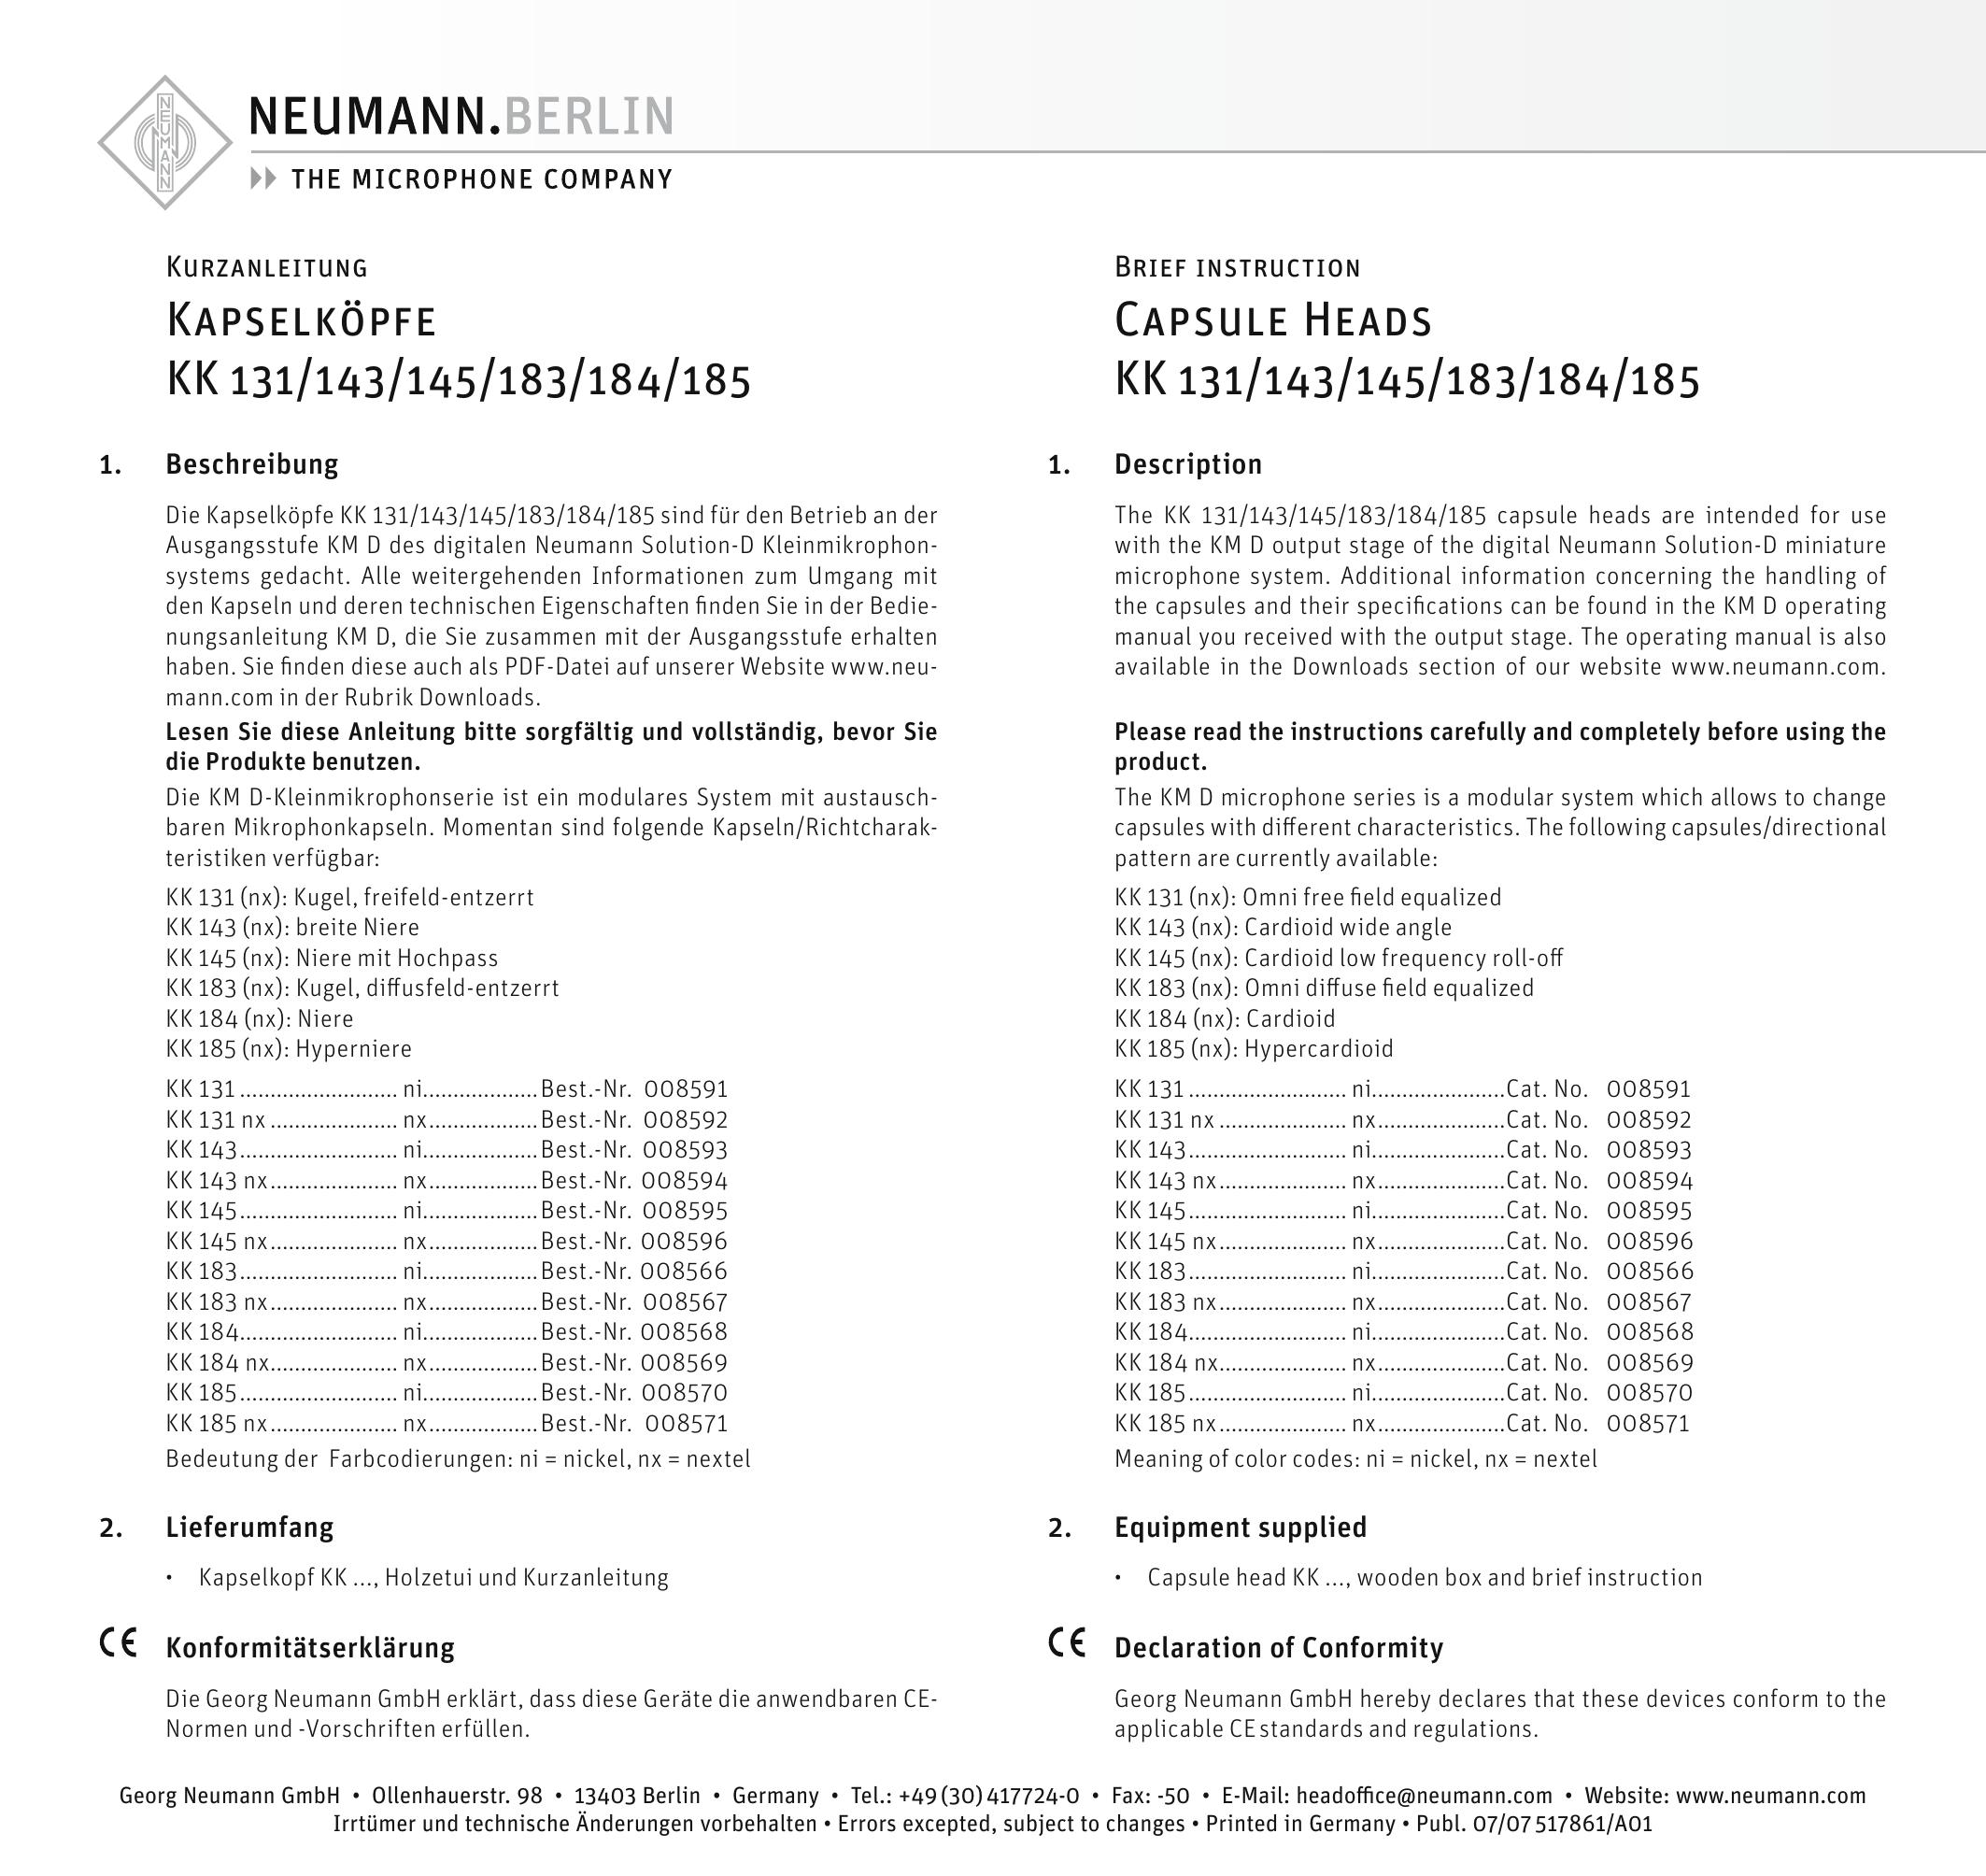 Neumann.Berlin KK 185 Microphone User Manual